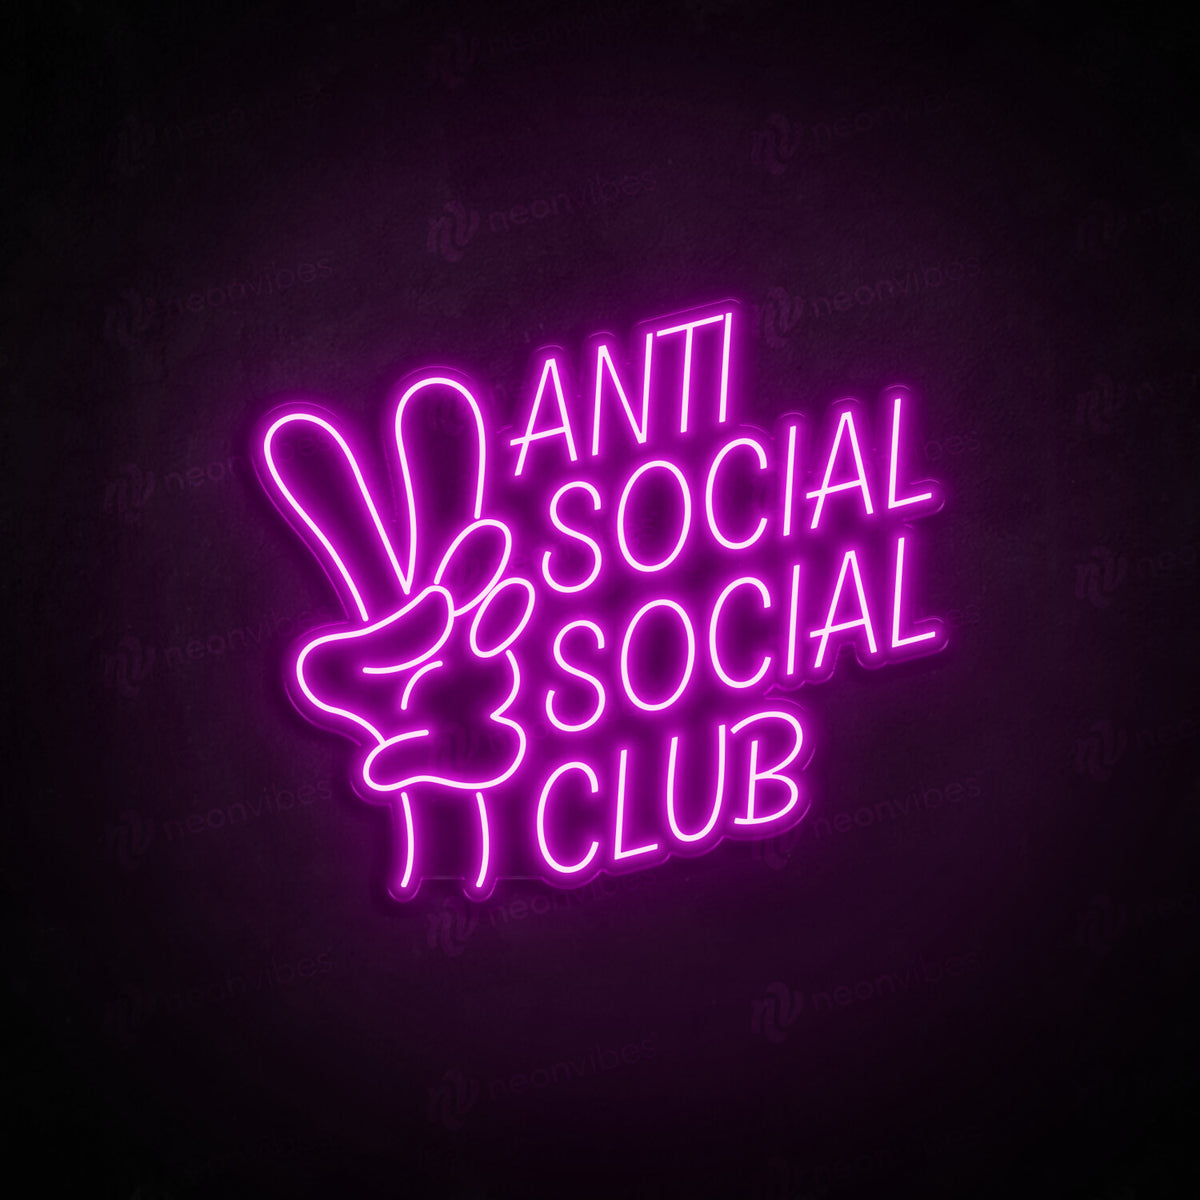 Anti social social club neon sign